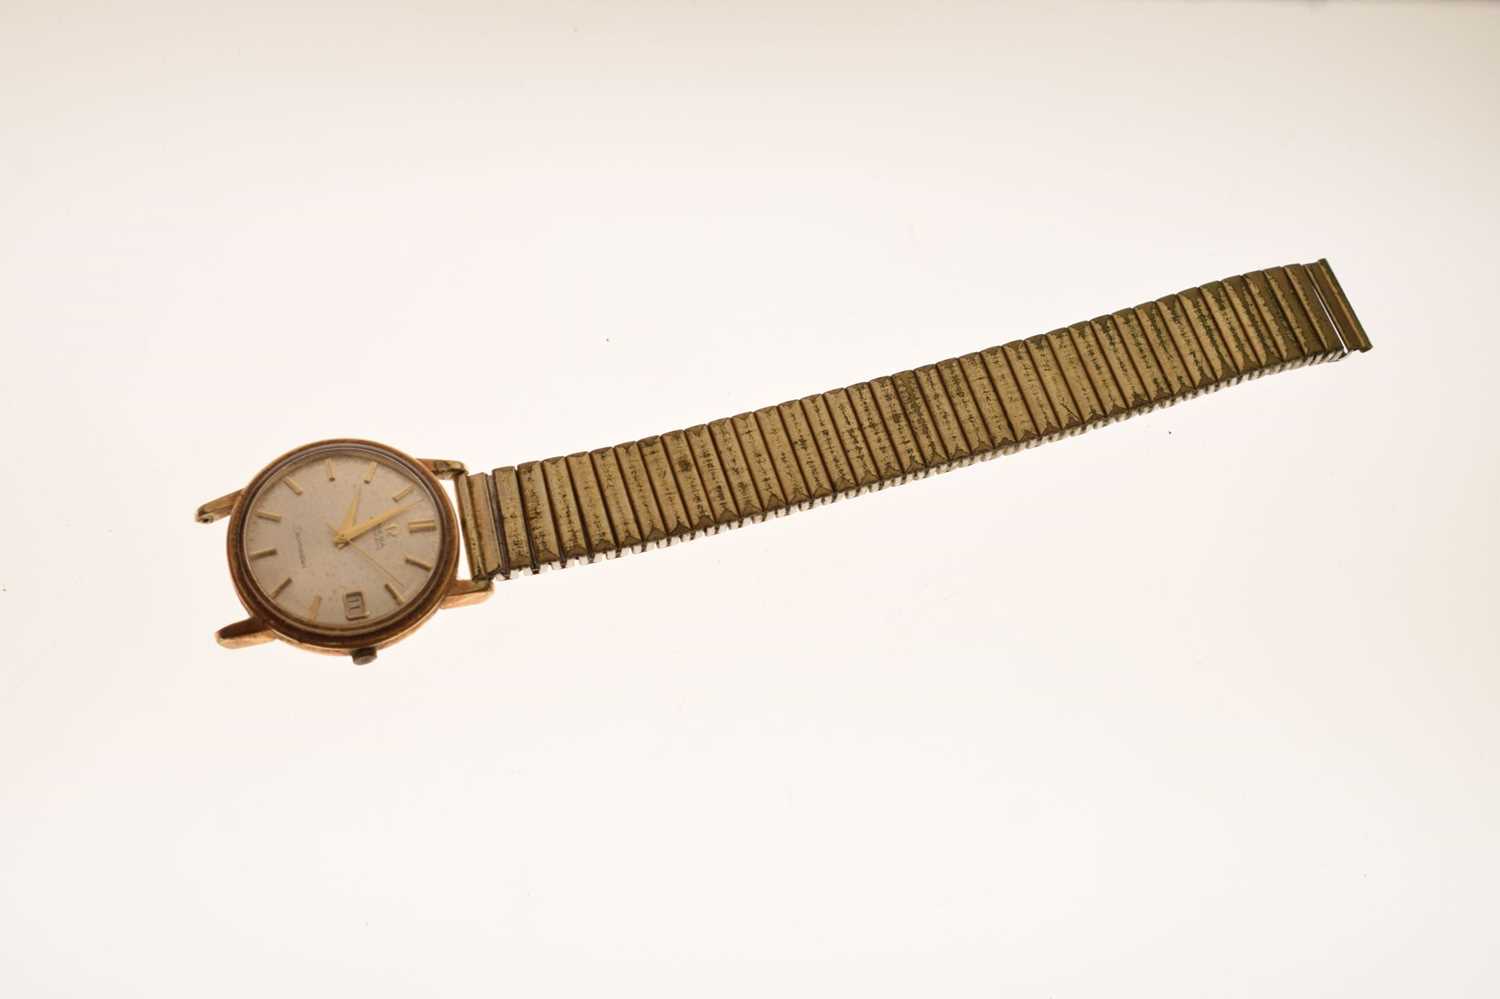 Omega - Gentleman's Seamaster gold plated bracelet watch - Image 2 of 8